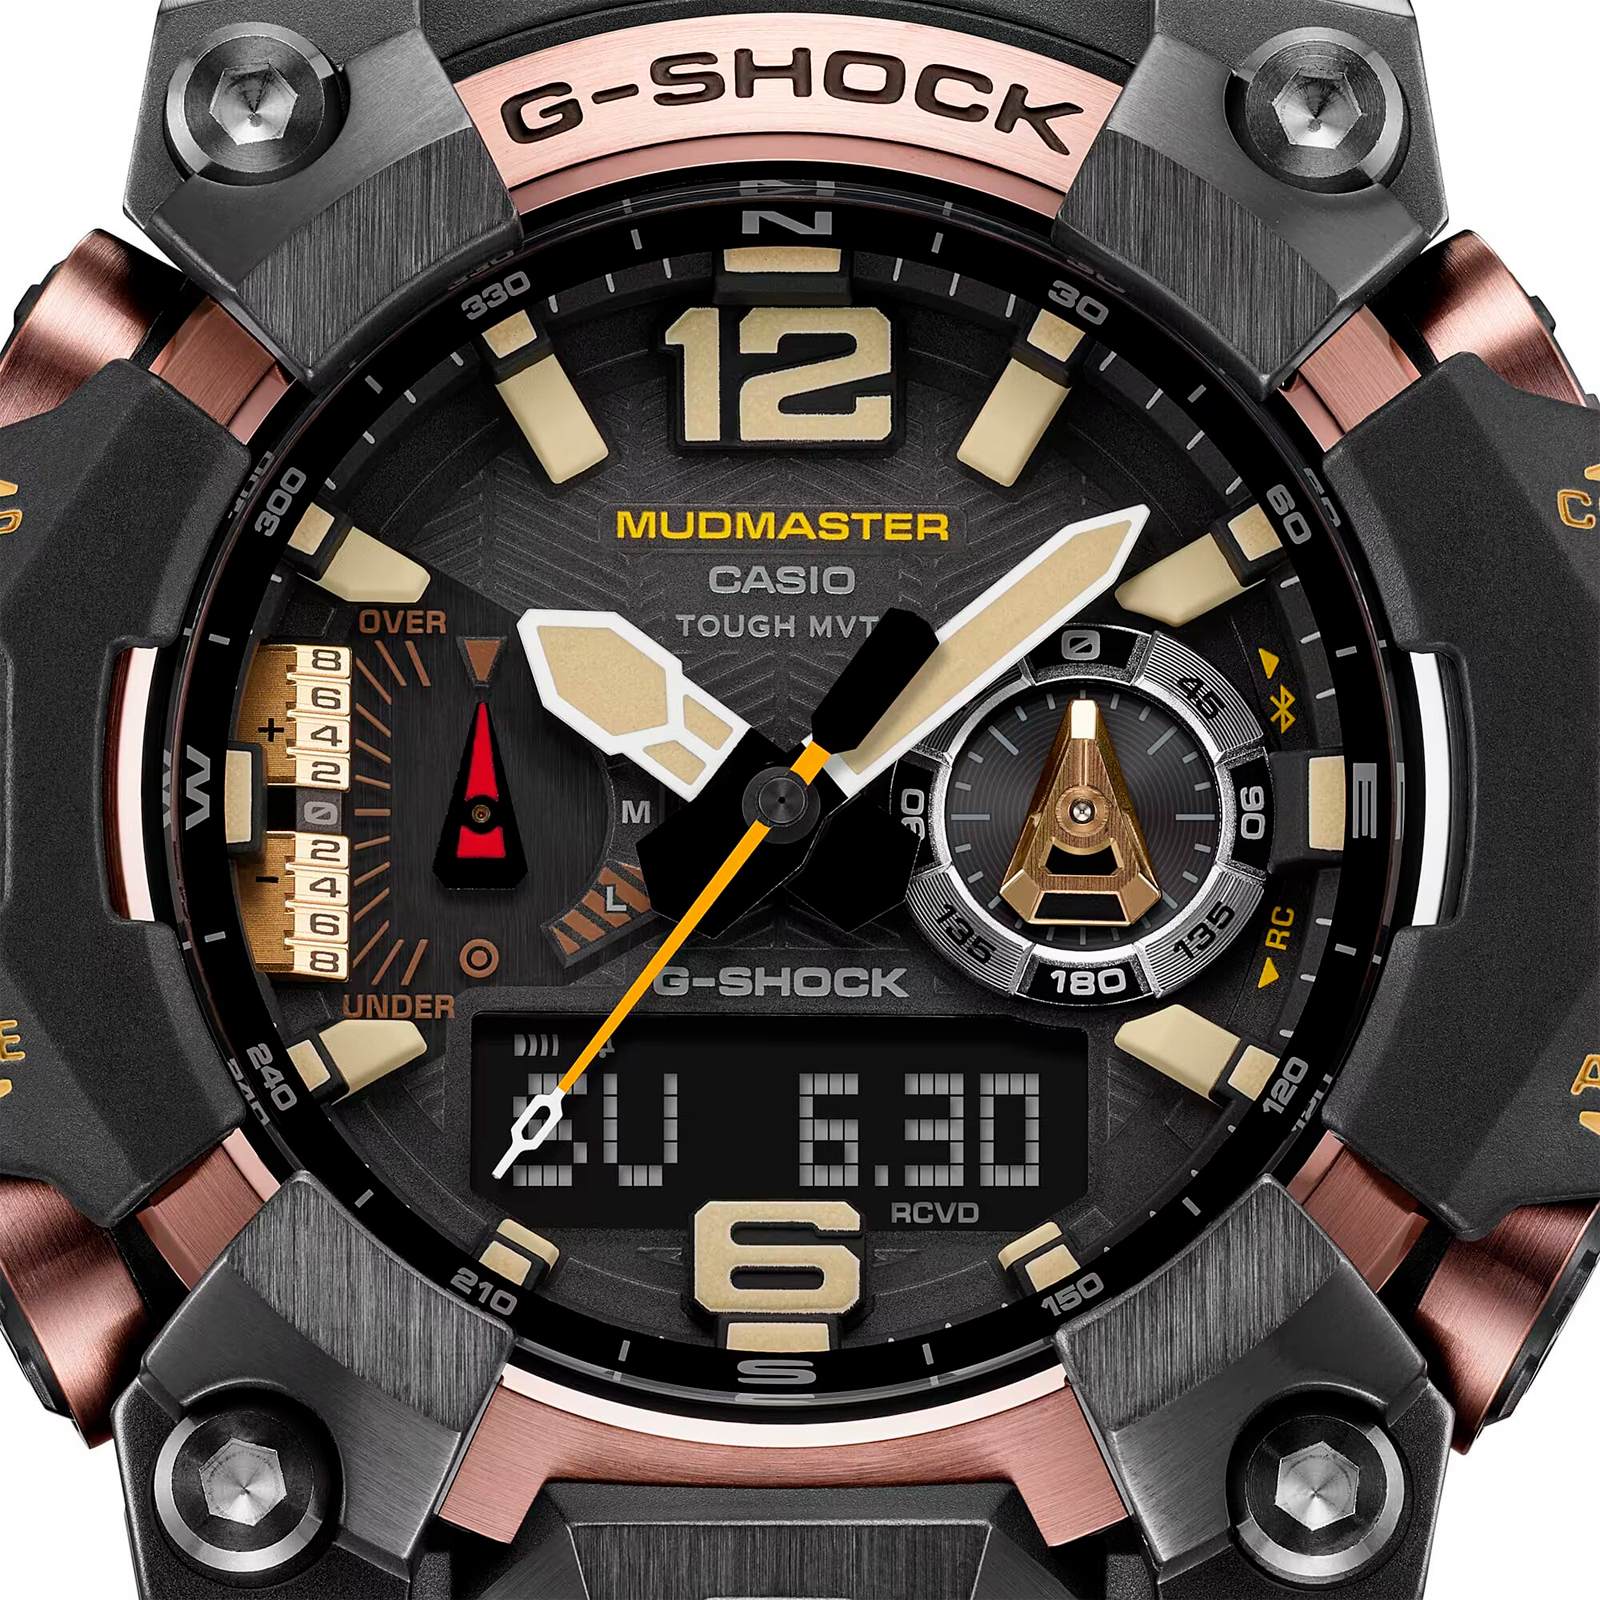 Reloj G-SHOCK GWG-B1000-1A4 Resina Hombre Negro